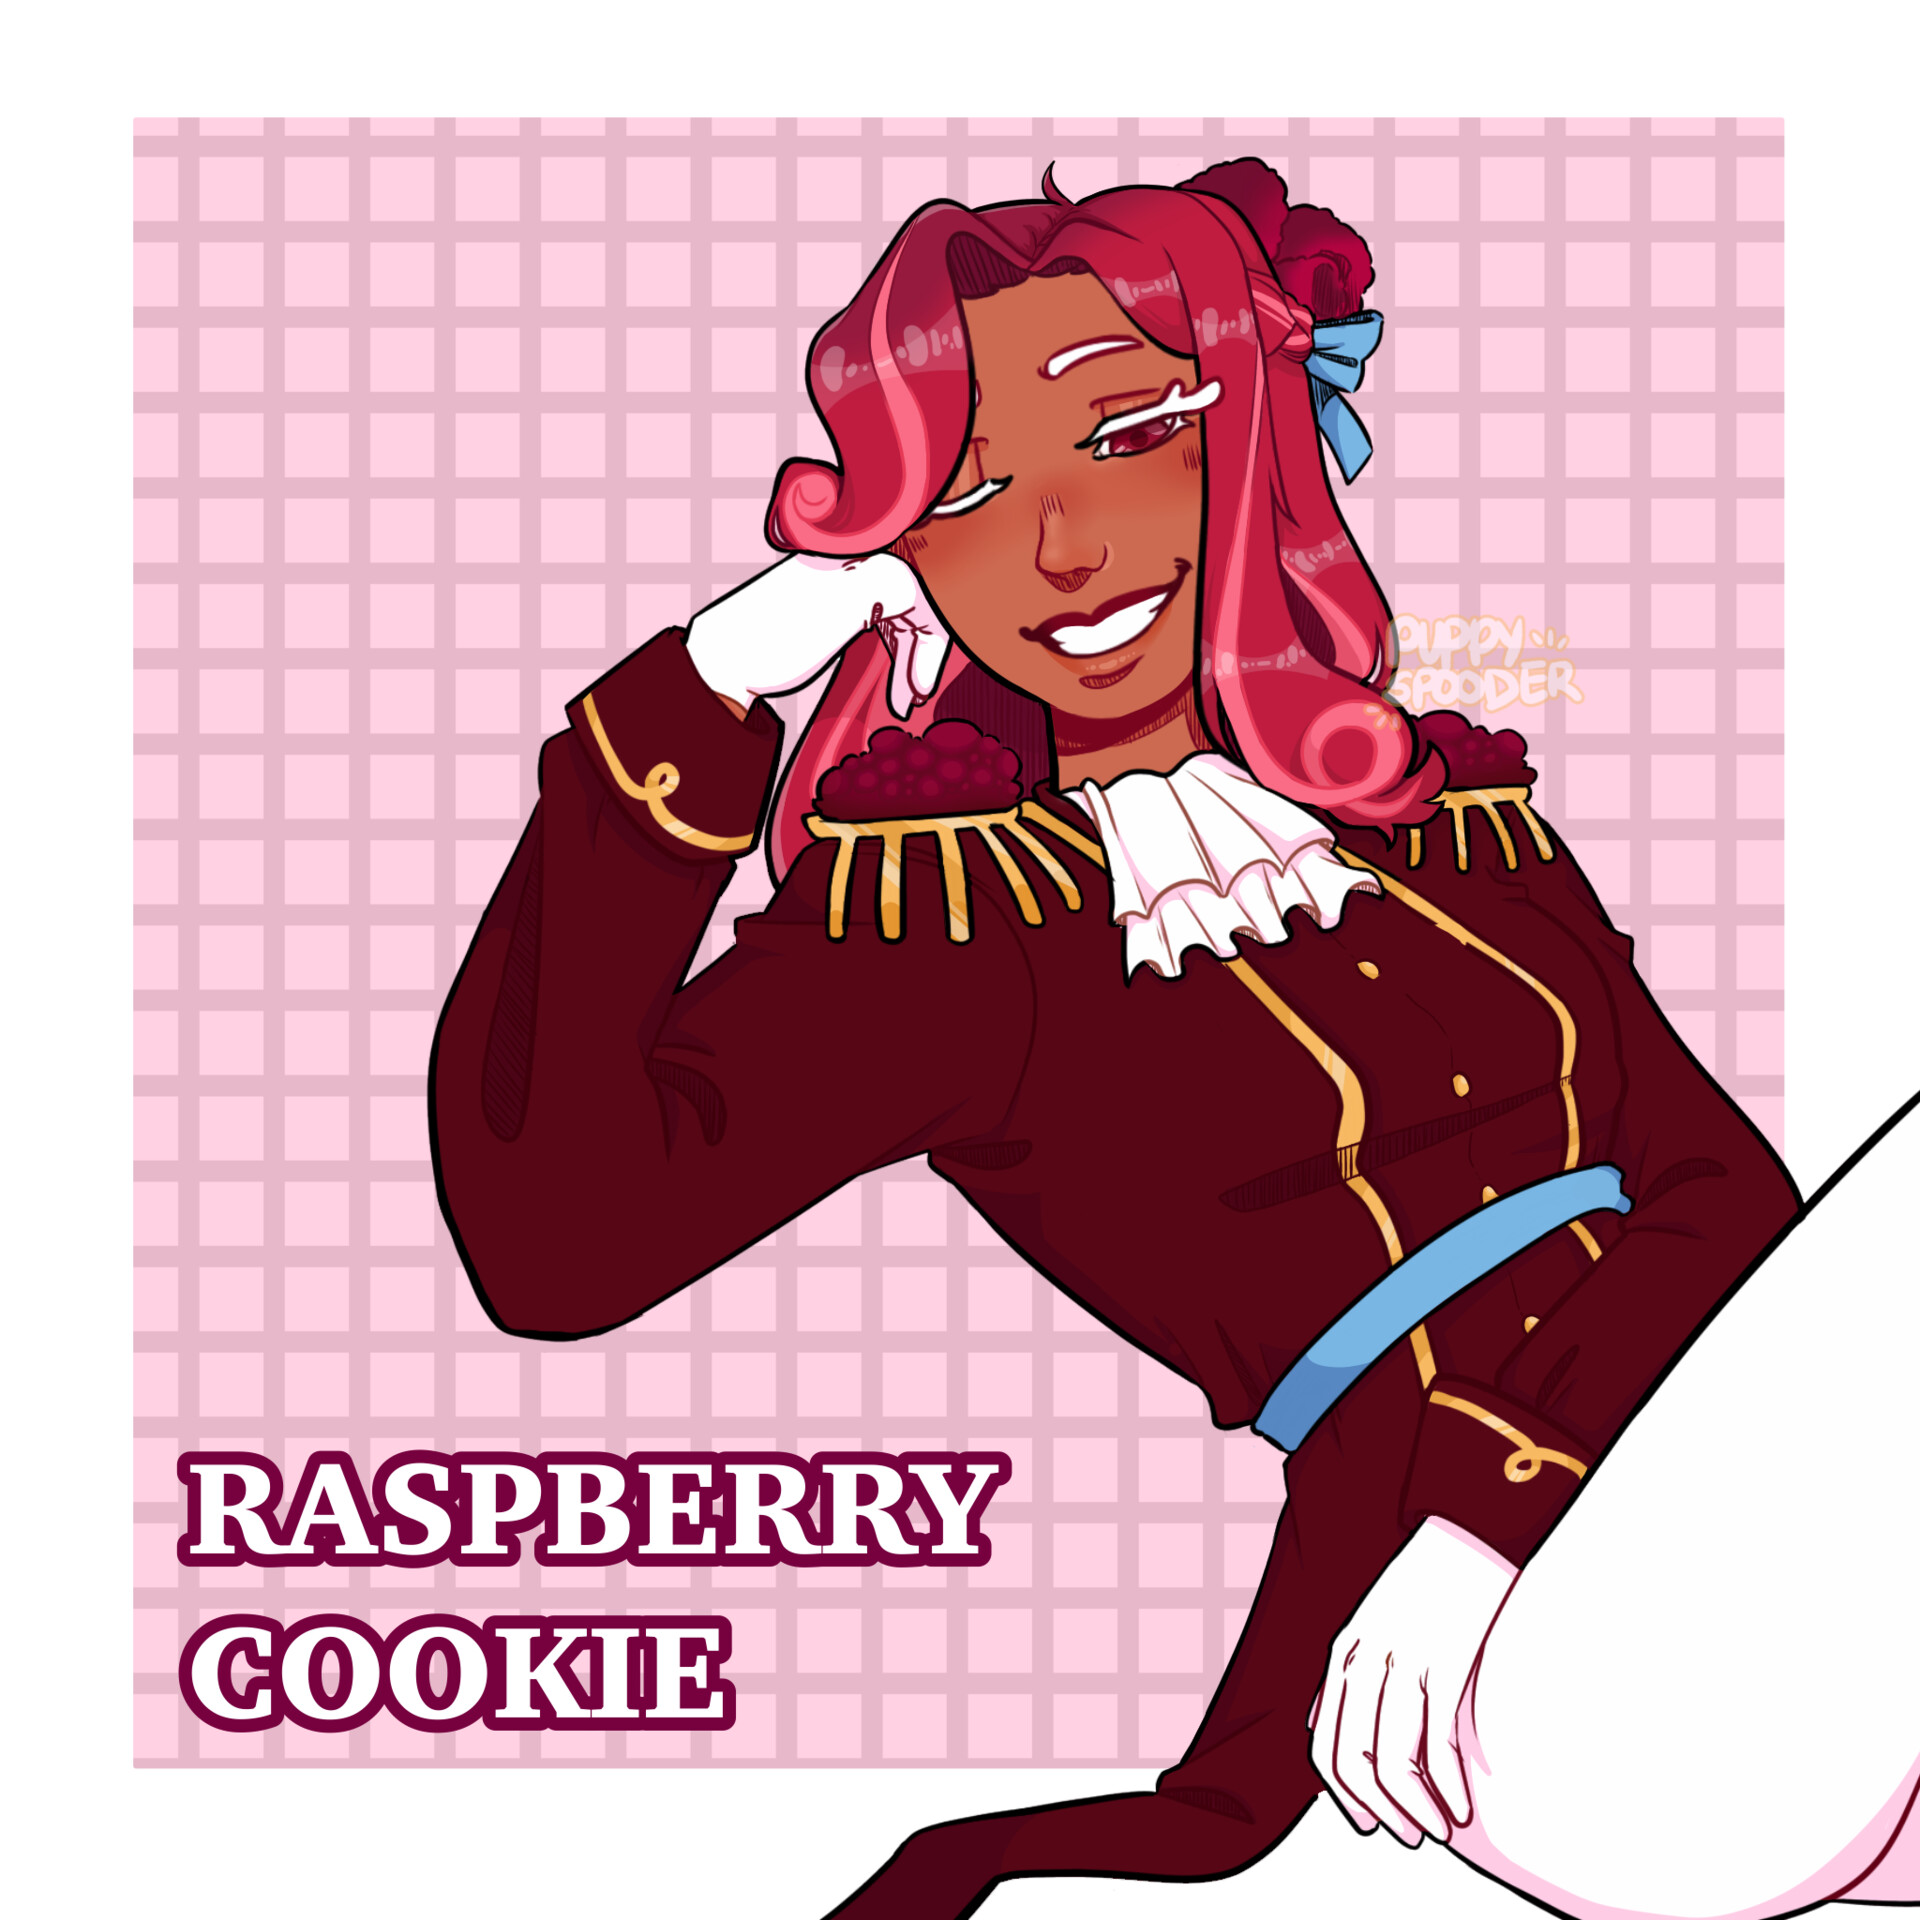 Raspberry cookie run